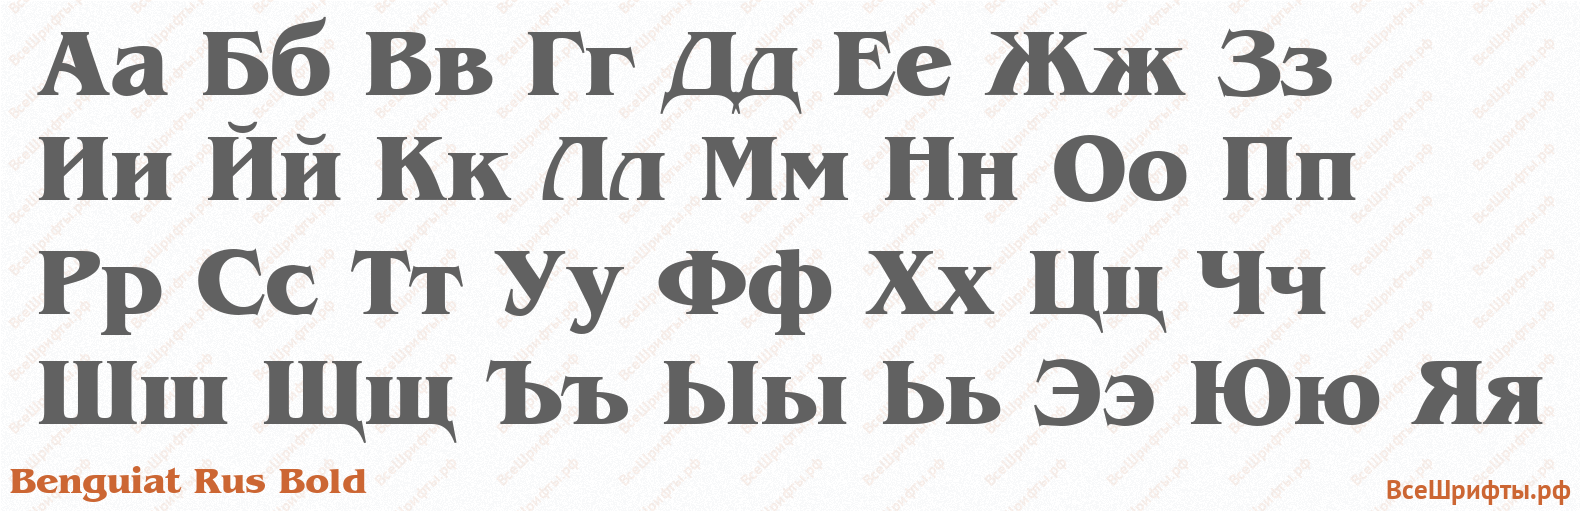 Шрифт Benguiat Rus Bold с русскими буквами